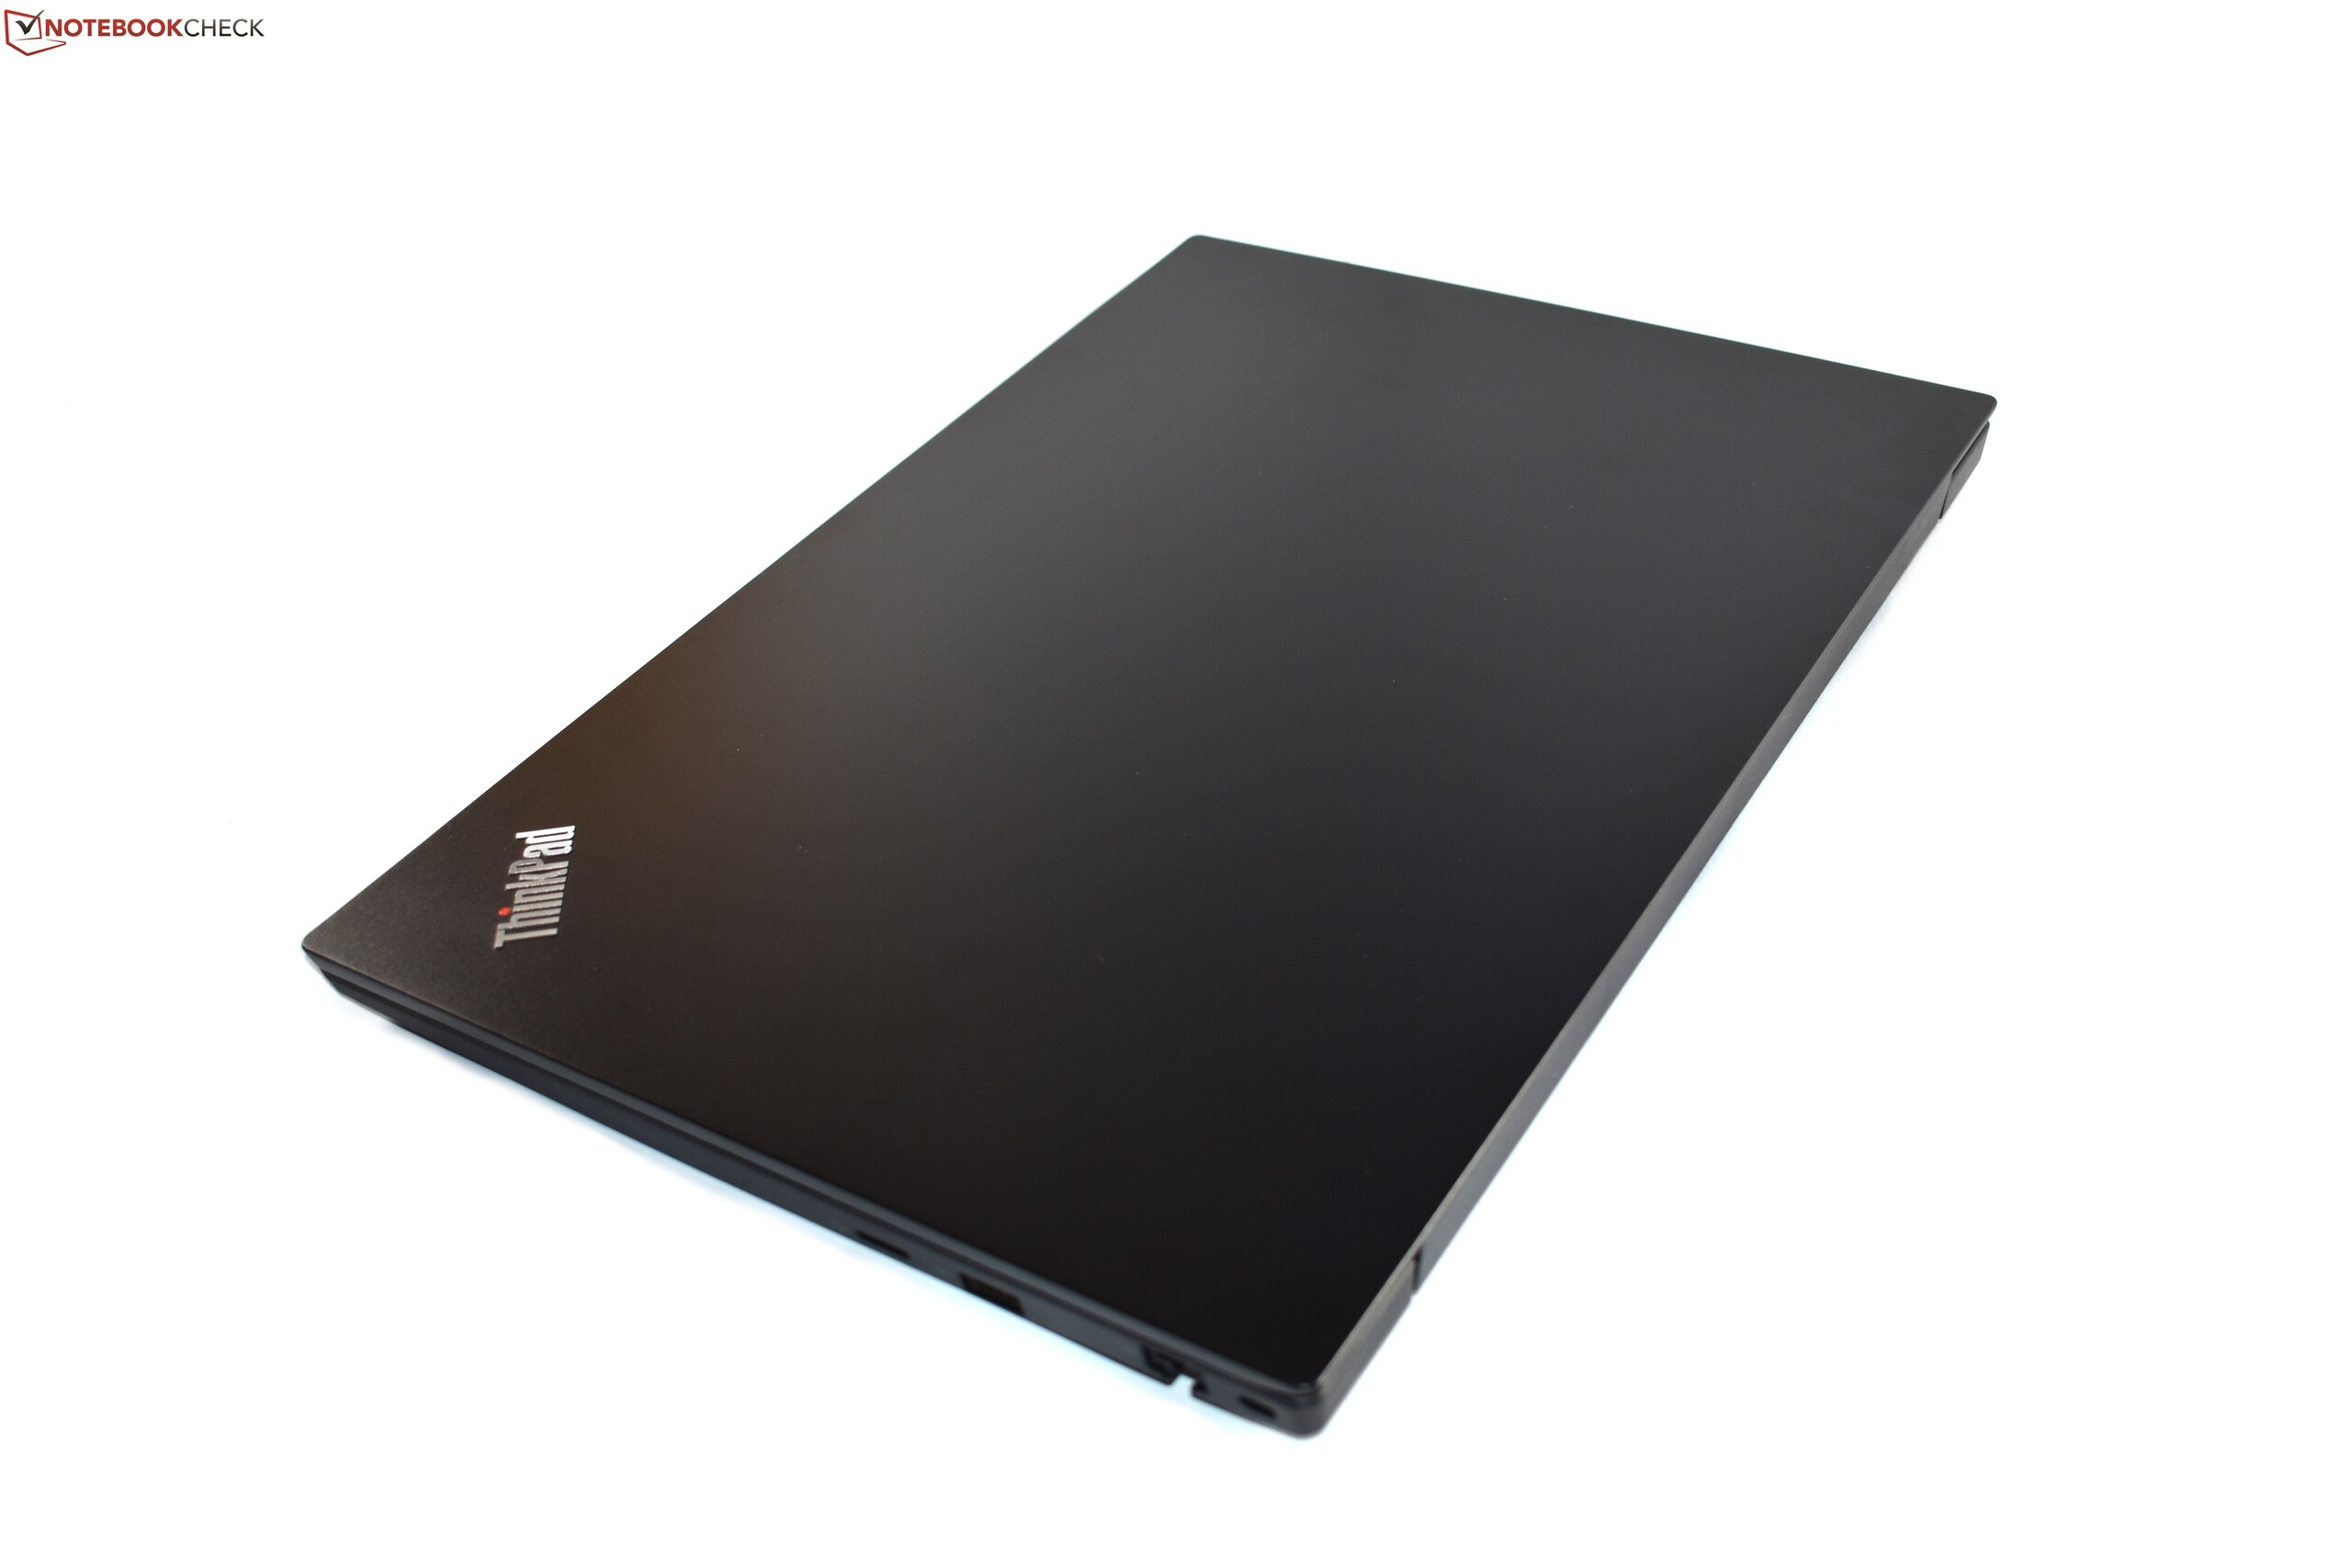 Lenovo ThinkPad E580 (i7-8550U, RX 550) Laptop Review - NotebookCheck ...